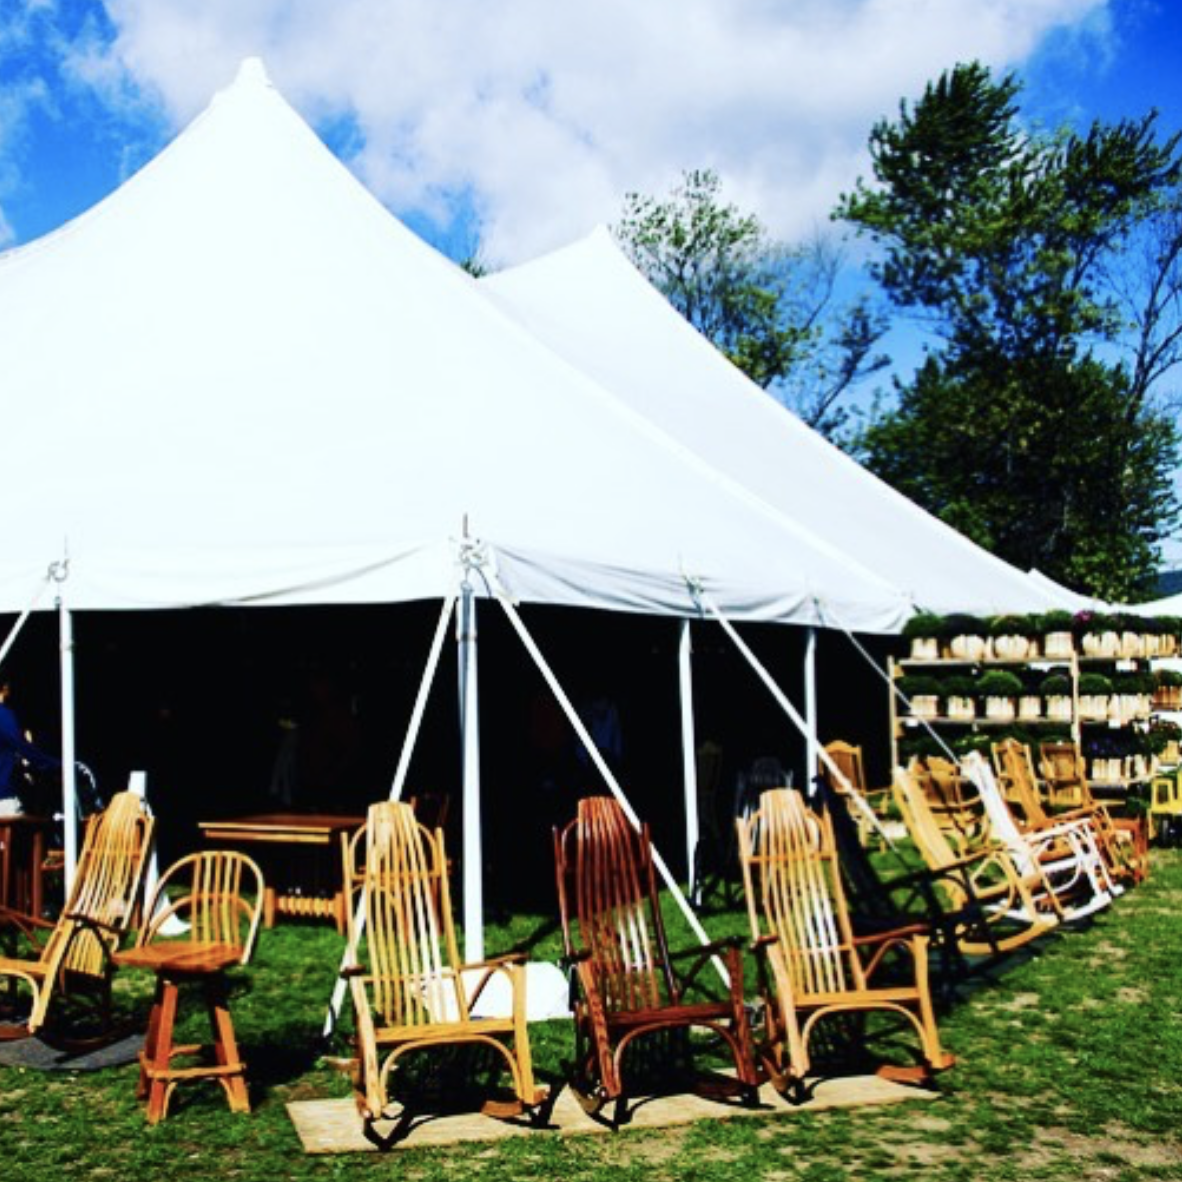 John Finnan Handmade Adirondack Chairs at the Woodstock-New Paltz Art & Crafts Fair